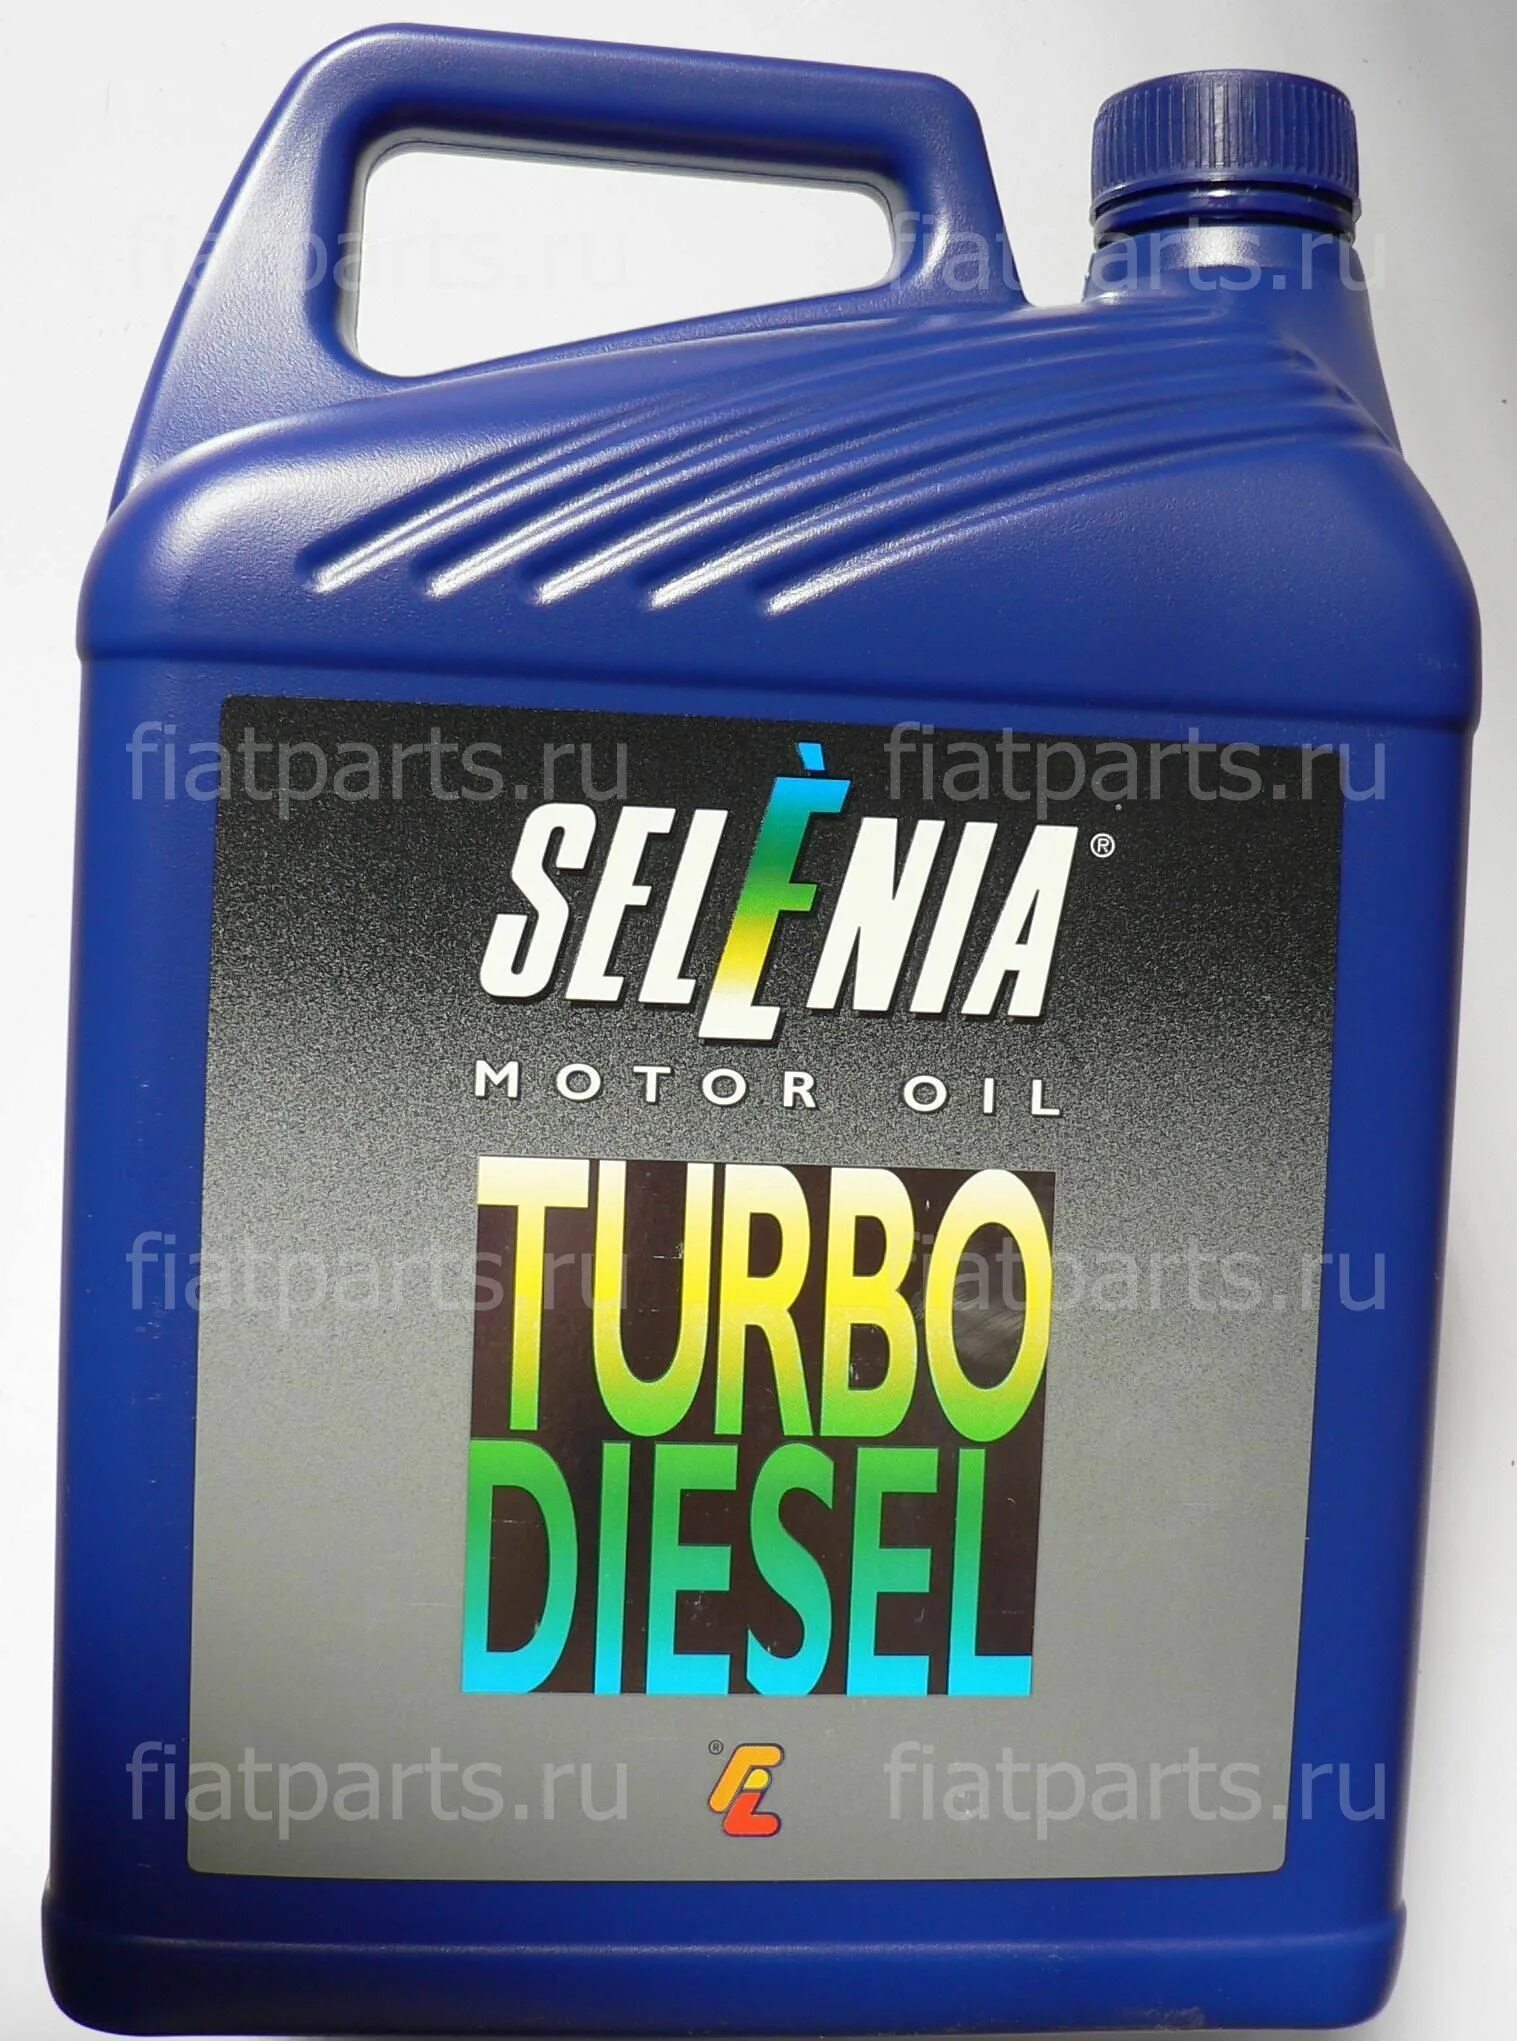 Selenia Turbo Diesel 10w-40 артикул. Selenia Turbo Diesel 5w-40. Petronas Selenia Turbo Diesel. Selenia Turbo Diesel 10w-40 2. Масло моторное 10w40 5л